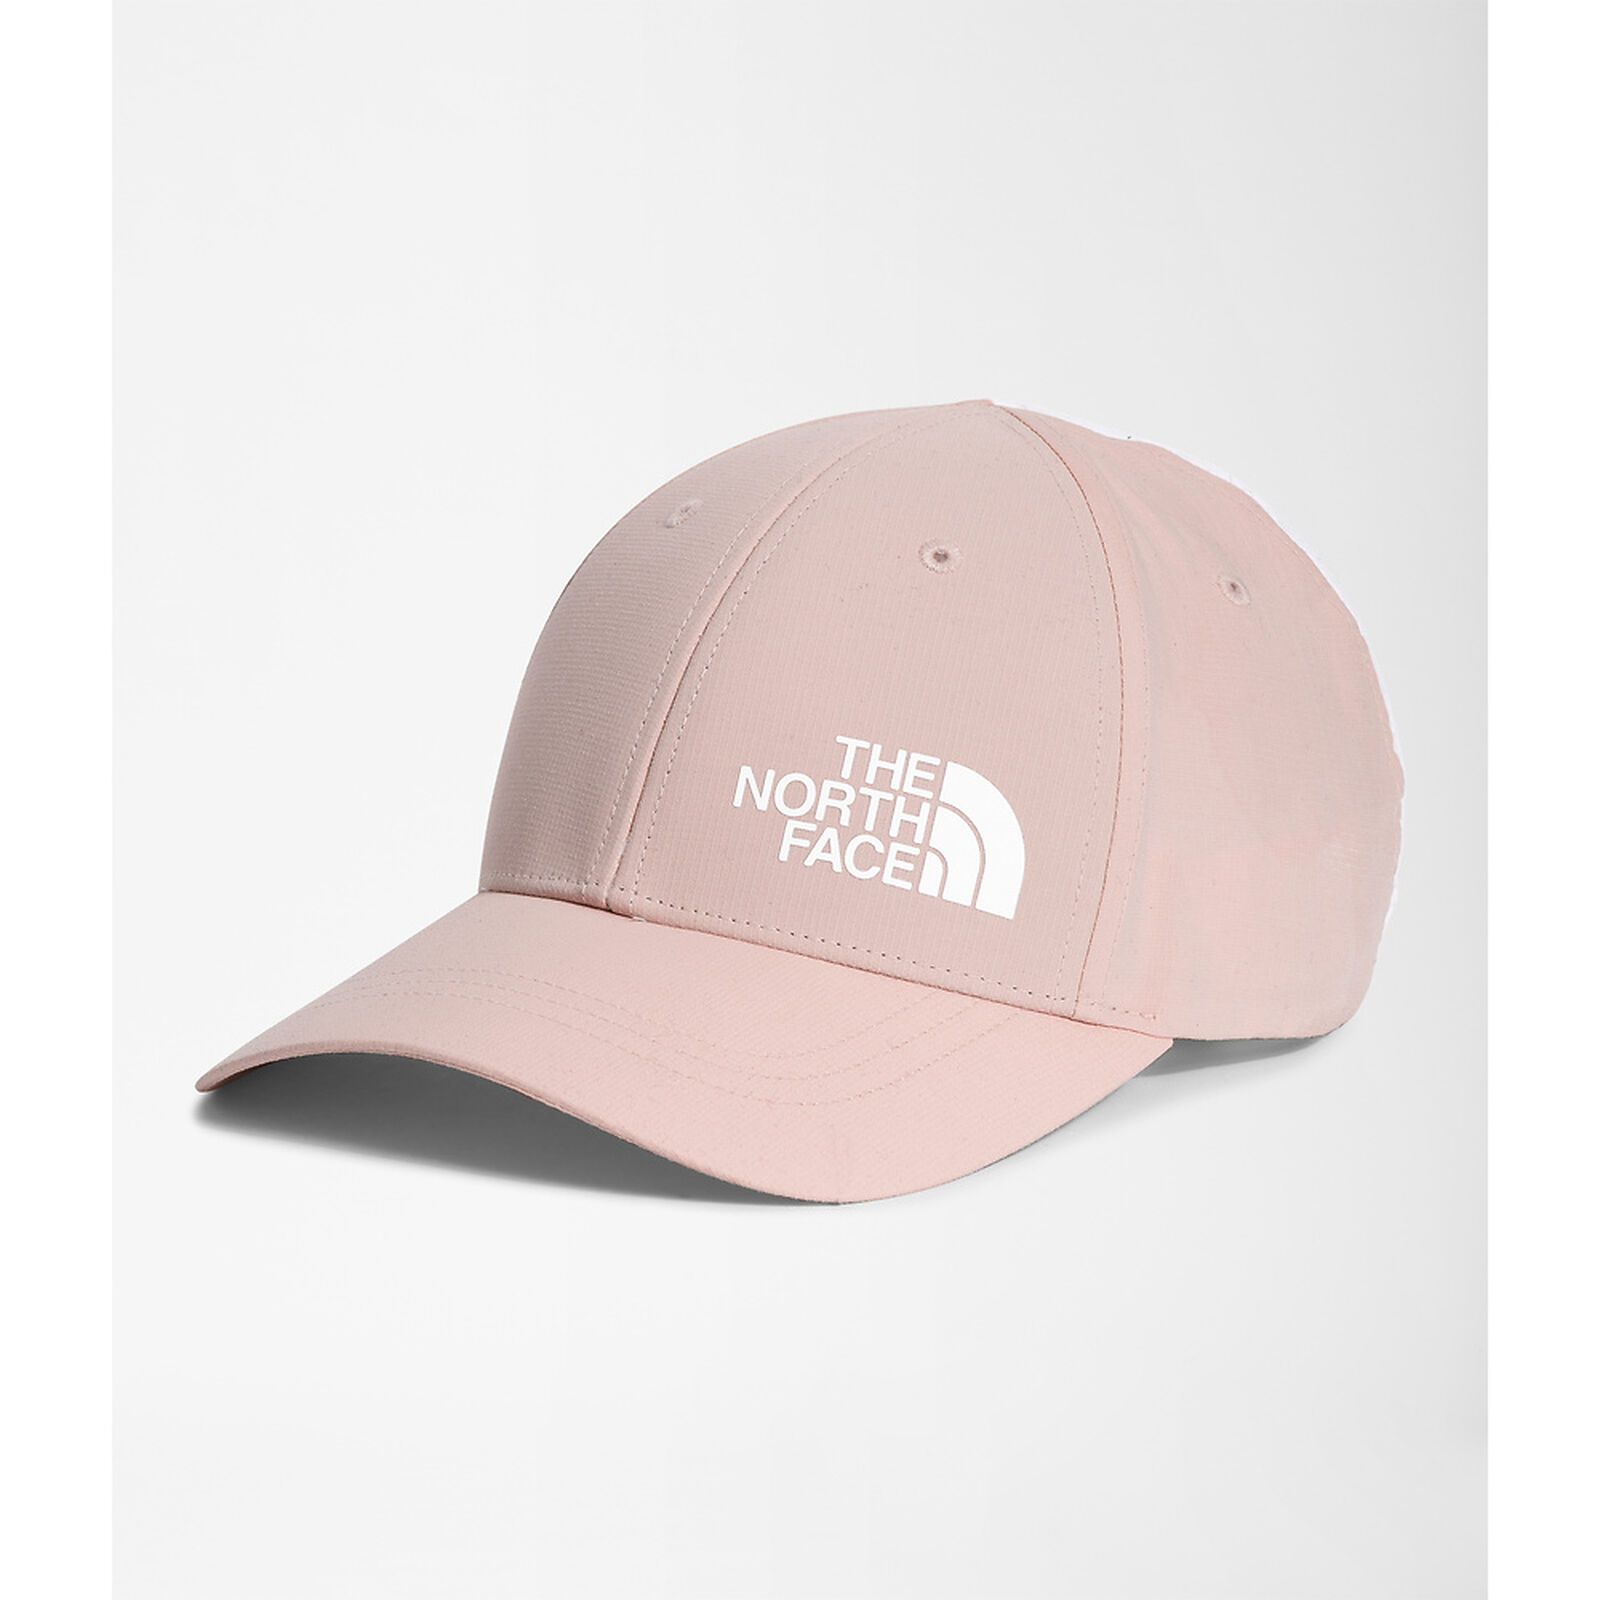 The North Face - Nón lưỡi trai dệt thoi Nam Nữ Women's Horizon Hat